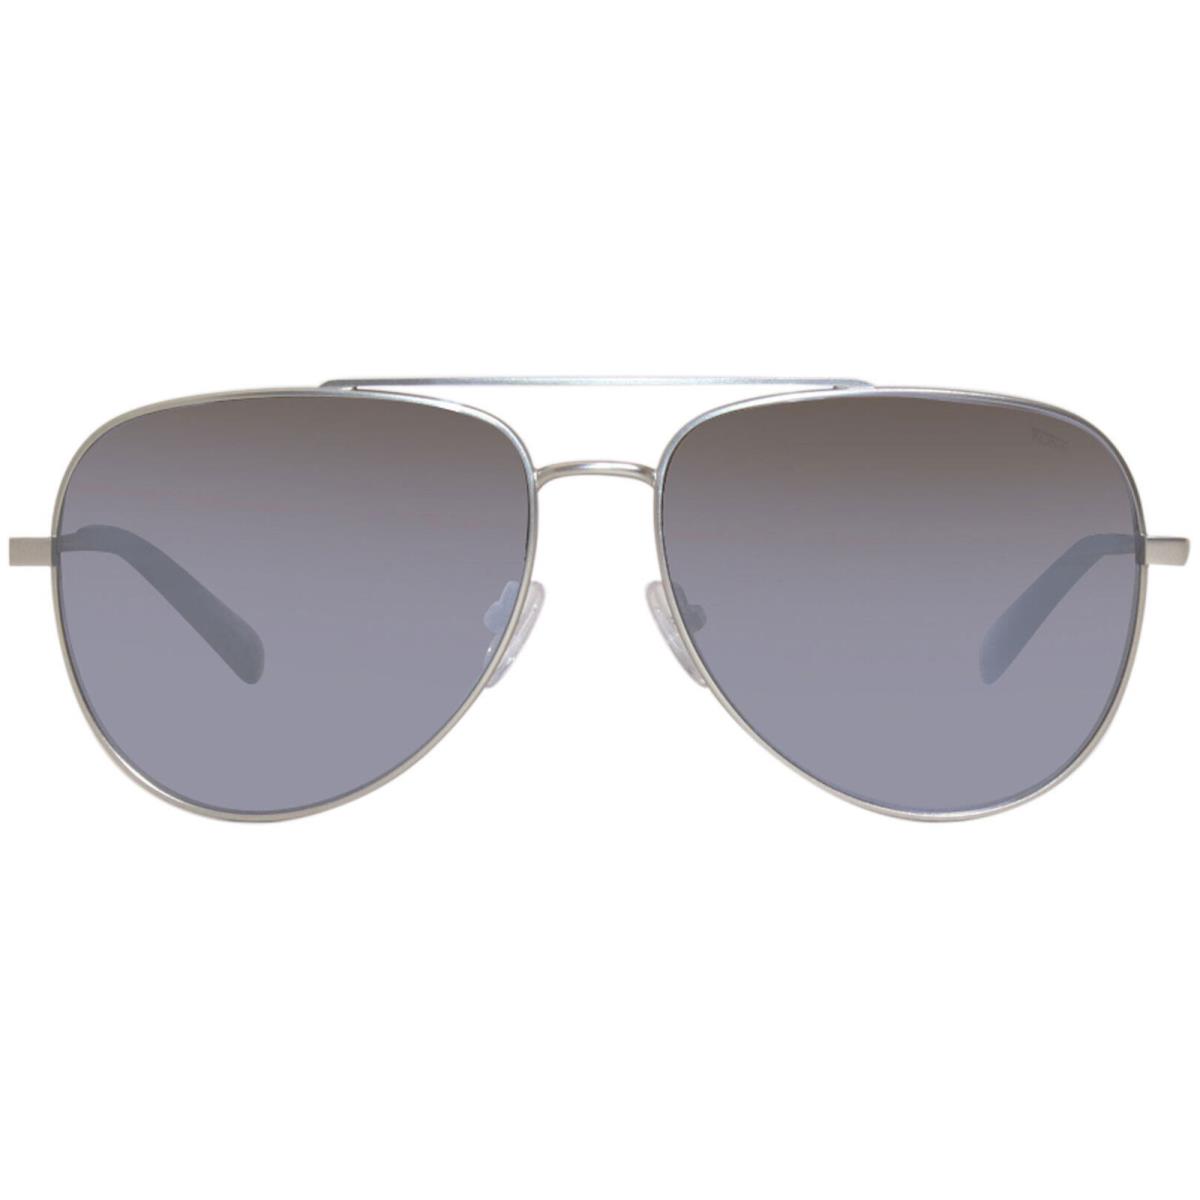 Tumi STU008 0581 Sunglasses Men`s Silver/grey Mirror Lenses Pilot Shape 59mm